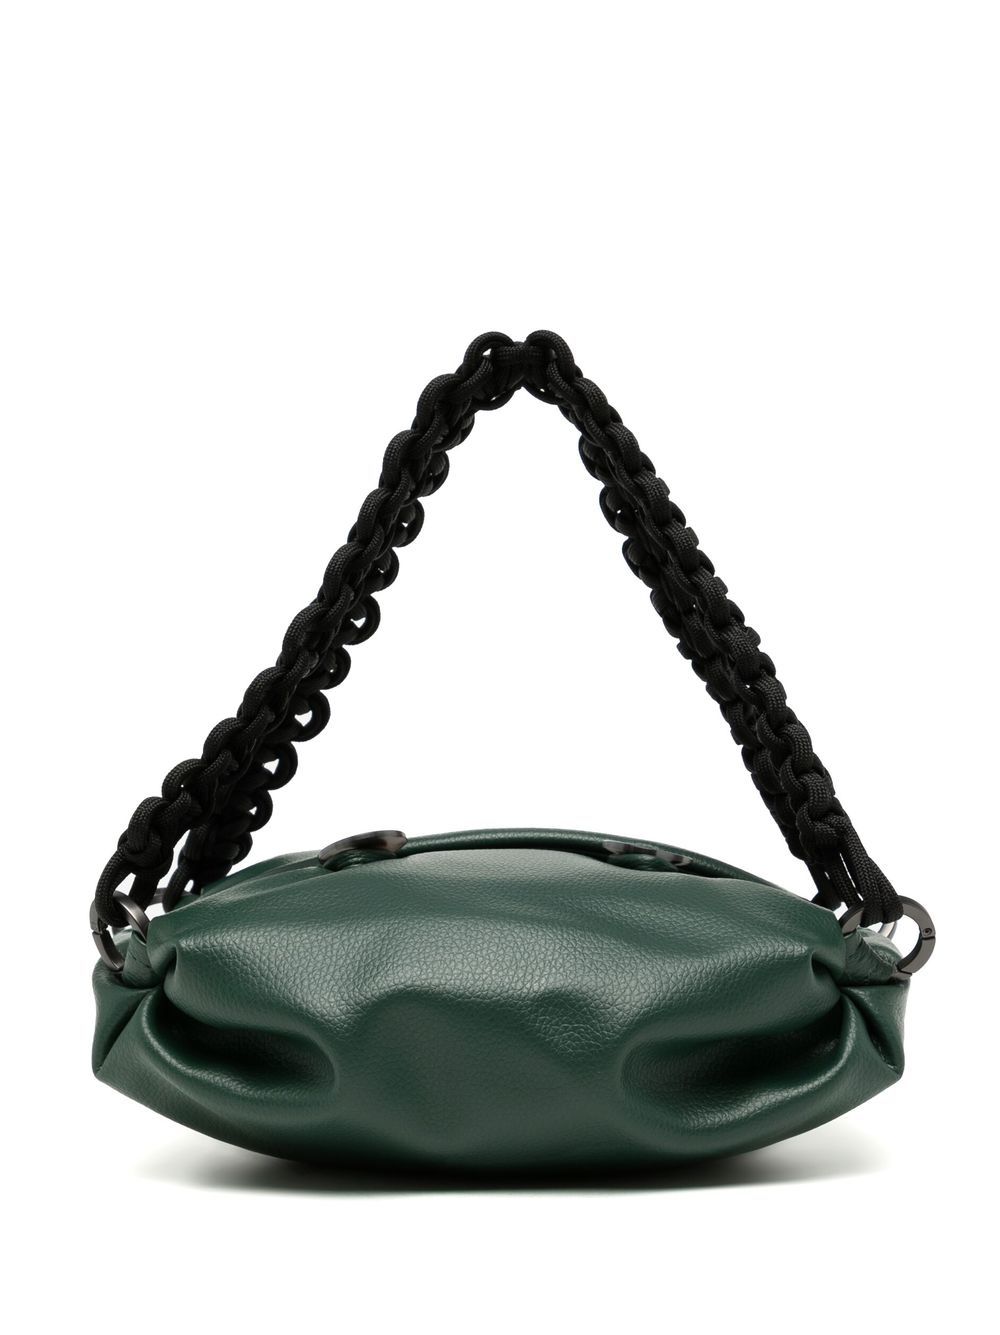 0711 Small Nino Tote Bag In Green